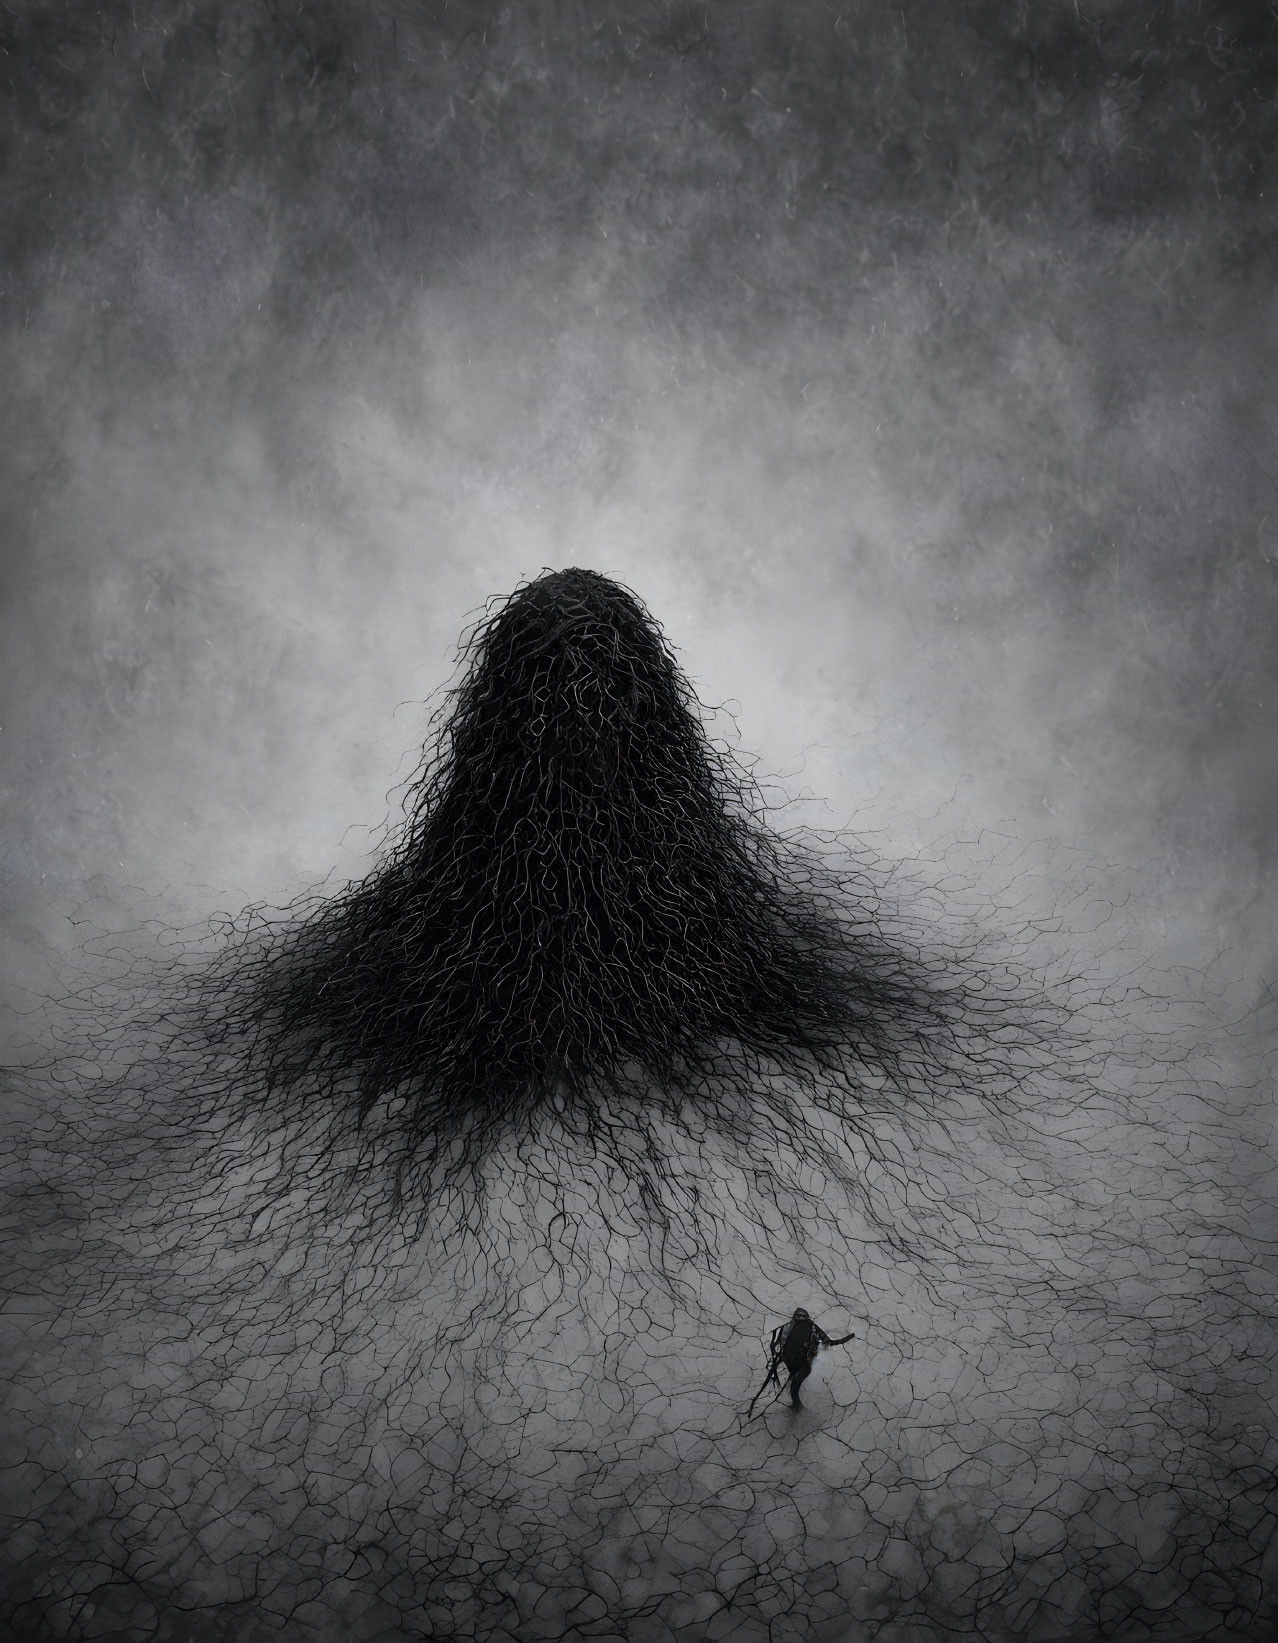 Solitary figure facing dark hillock under brooding sky